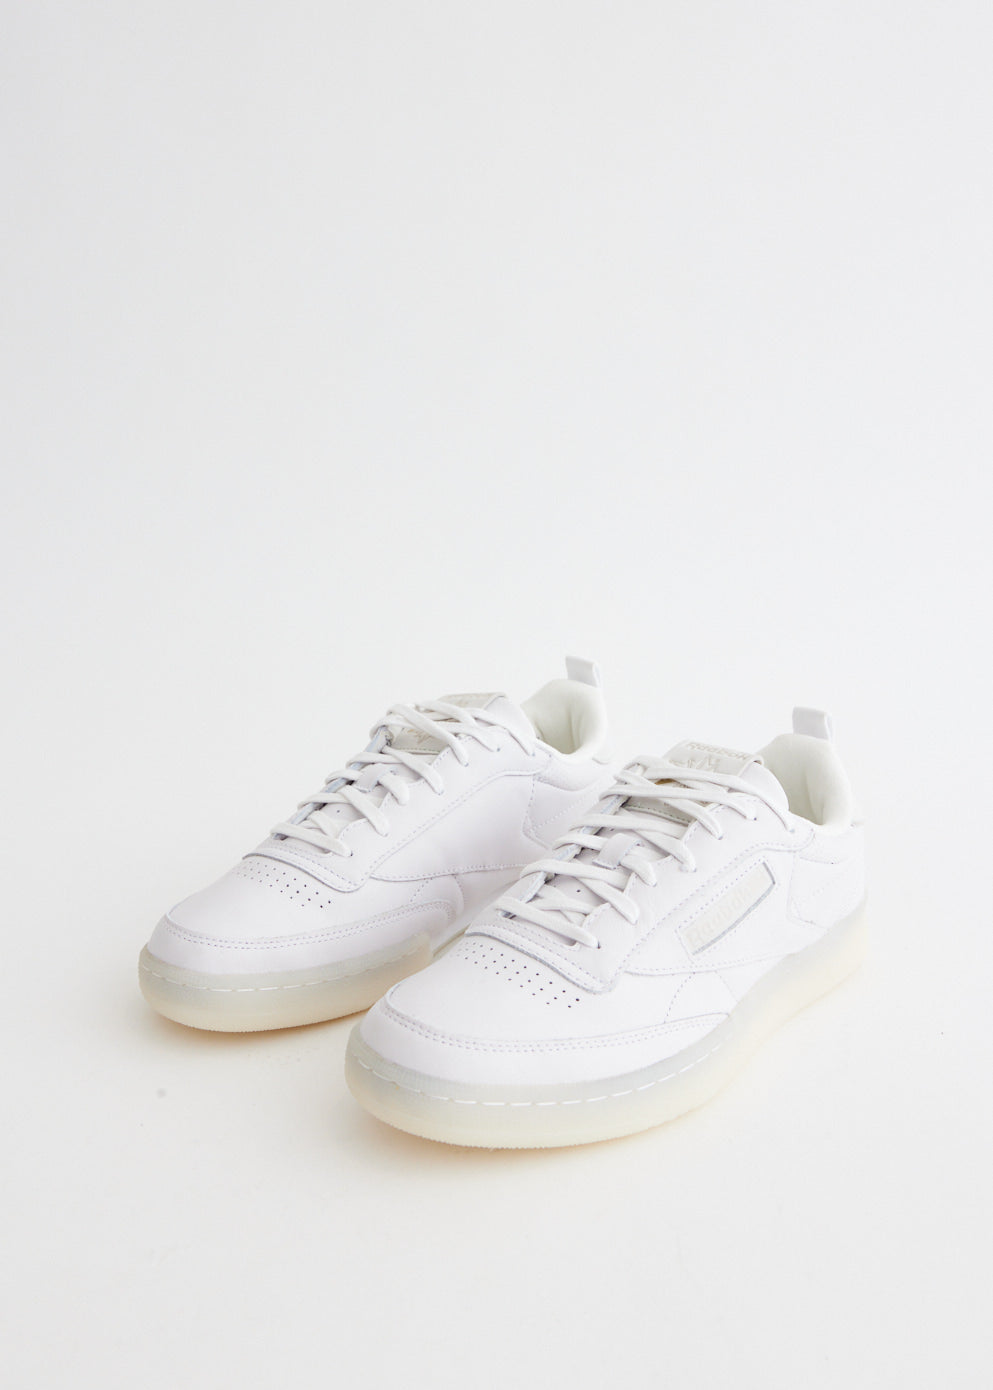 Club C 85 Luxury 'White' Sneakers